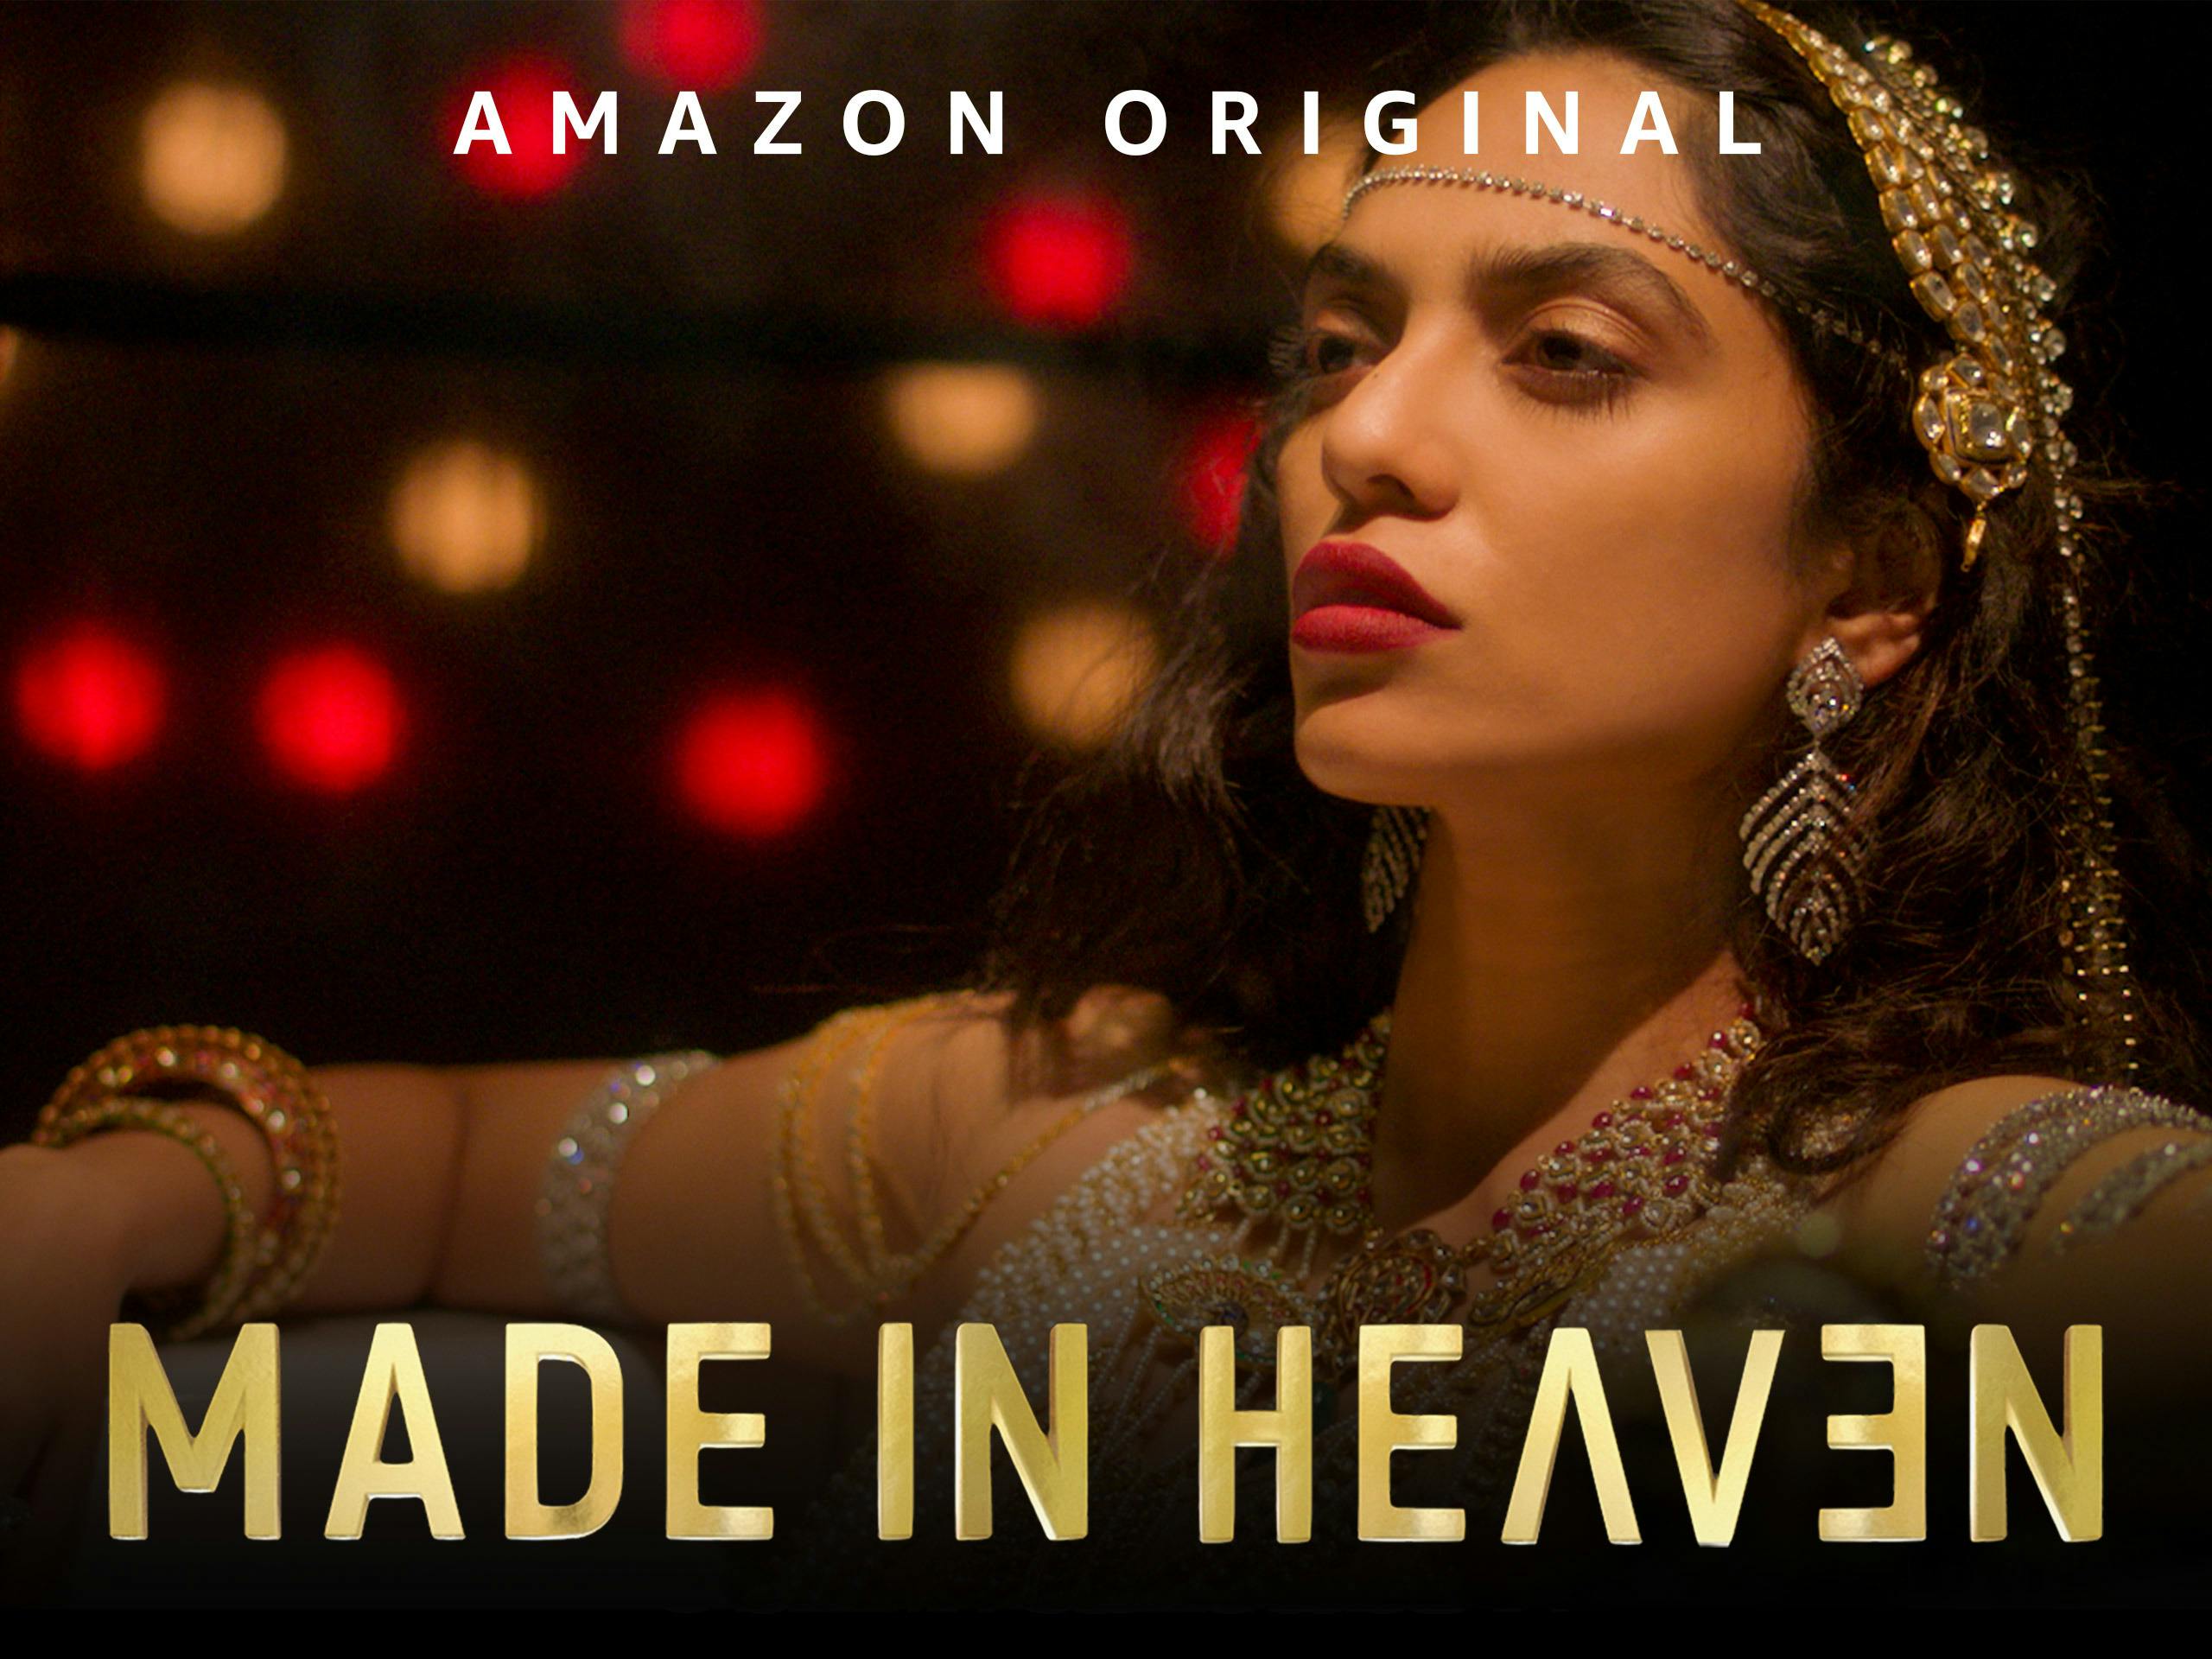 "Made in Heaven" (Amazon Prime Video)